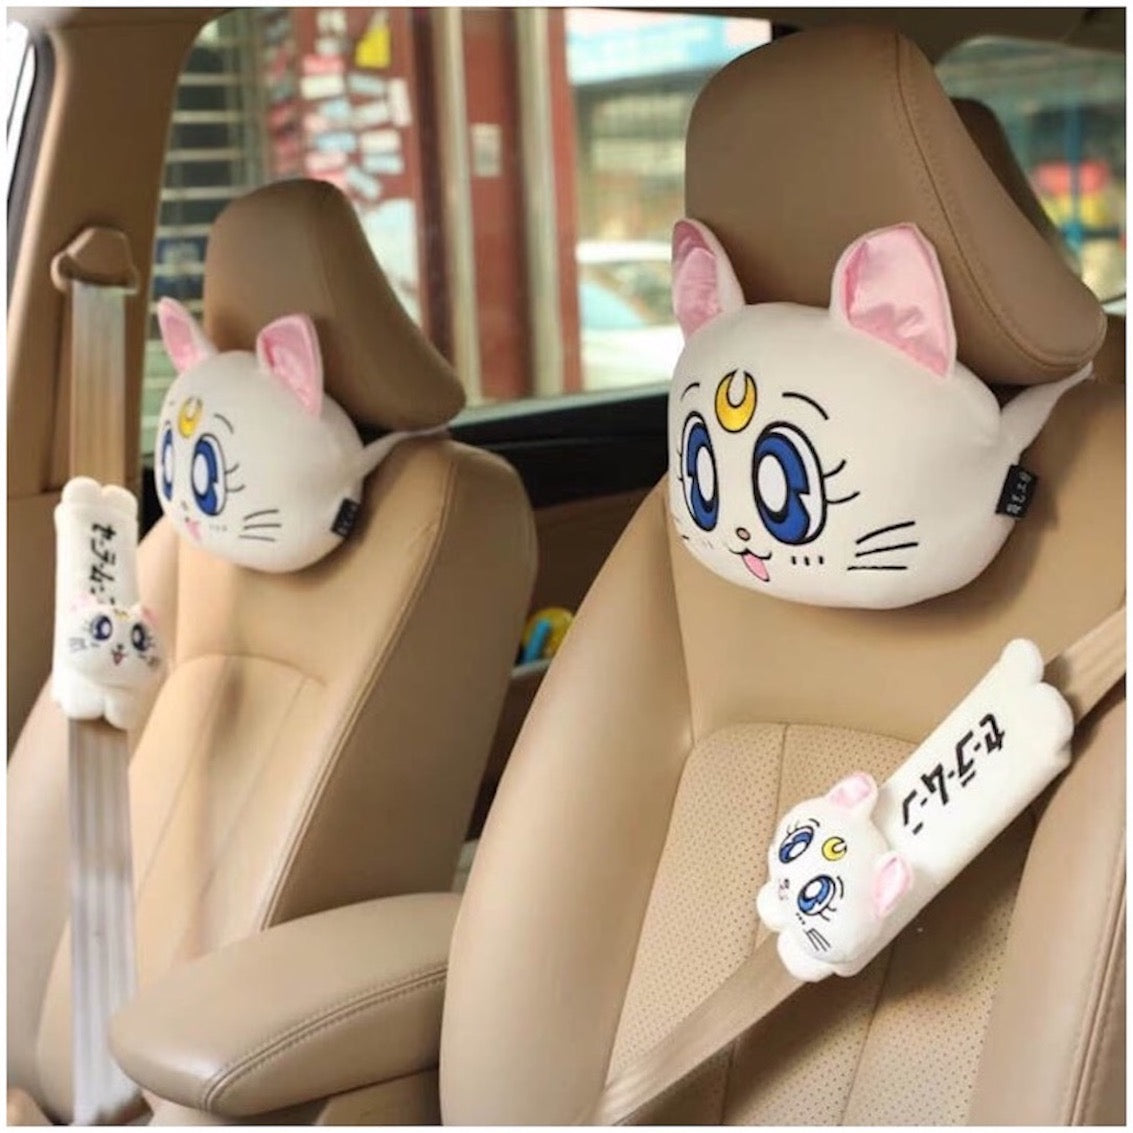 Car Headrest Pillow, Daisy Flower Neck Pillow for Car, Car seat Shoulder  Pads, Car Seat Strap Covers, Seatbelt Covers for Women-Beige Flower- Waist